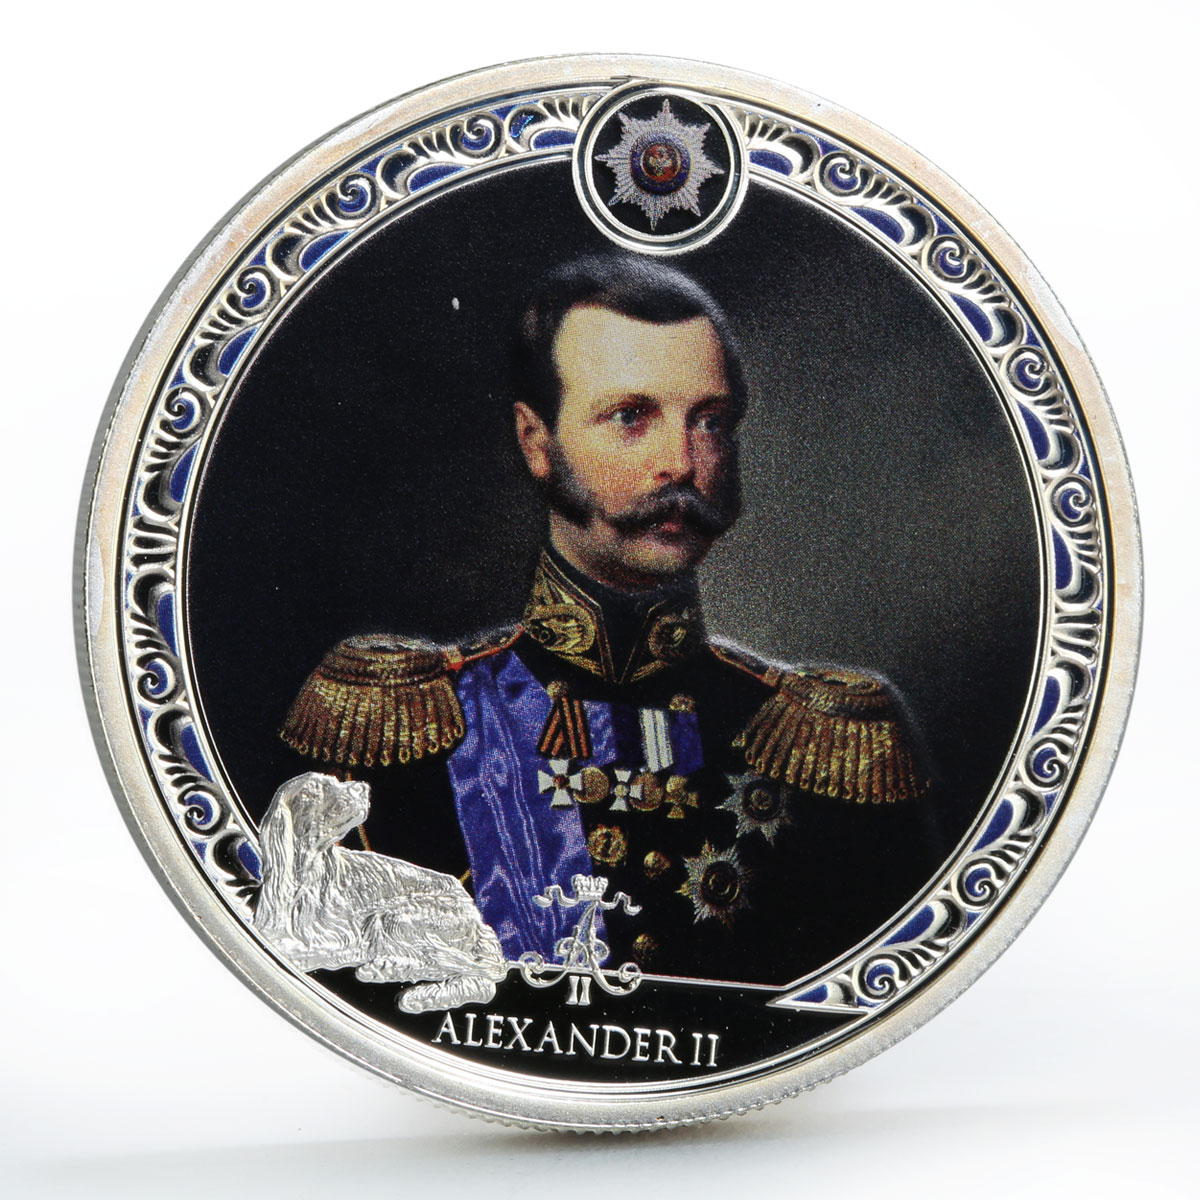 Fiji 2 dollars Russian Emperor Alexander II proof colored silver coin 2012